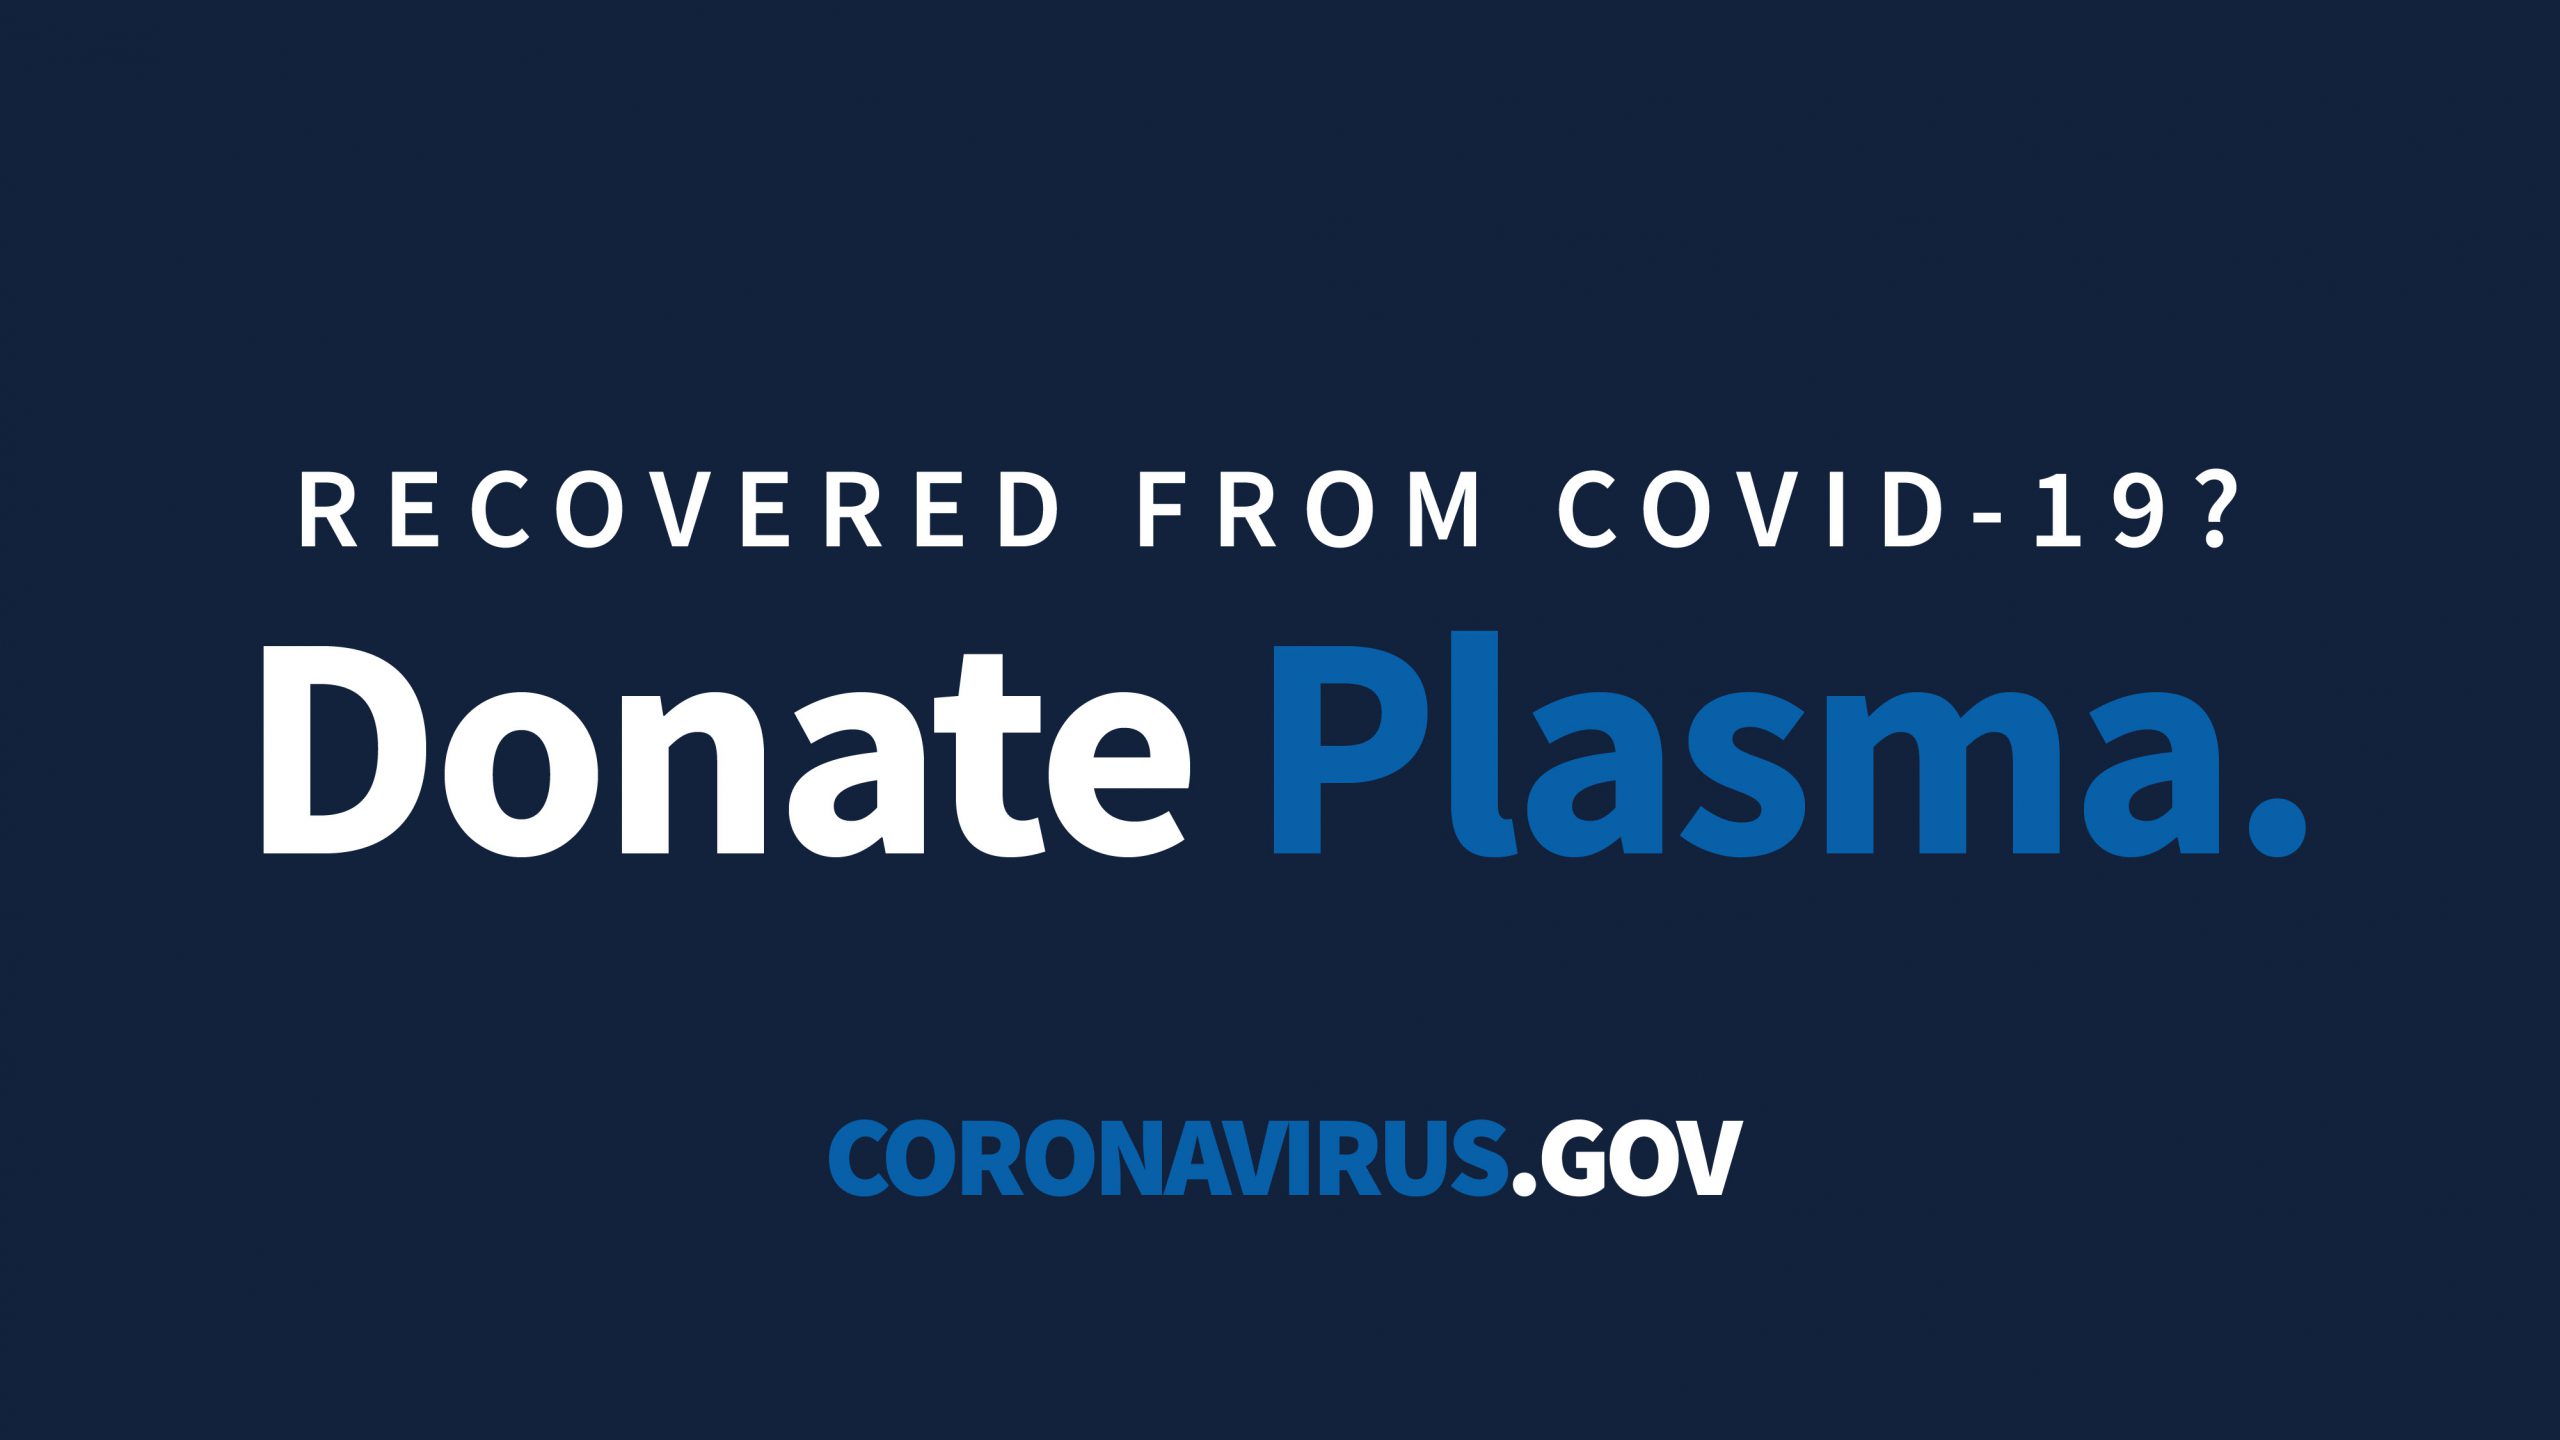 Recovered from COVID-19? Donate Plasma. Coronavirus.gov